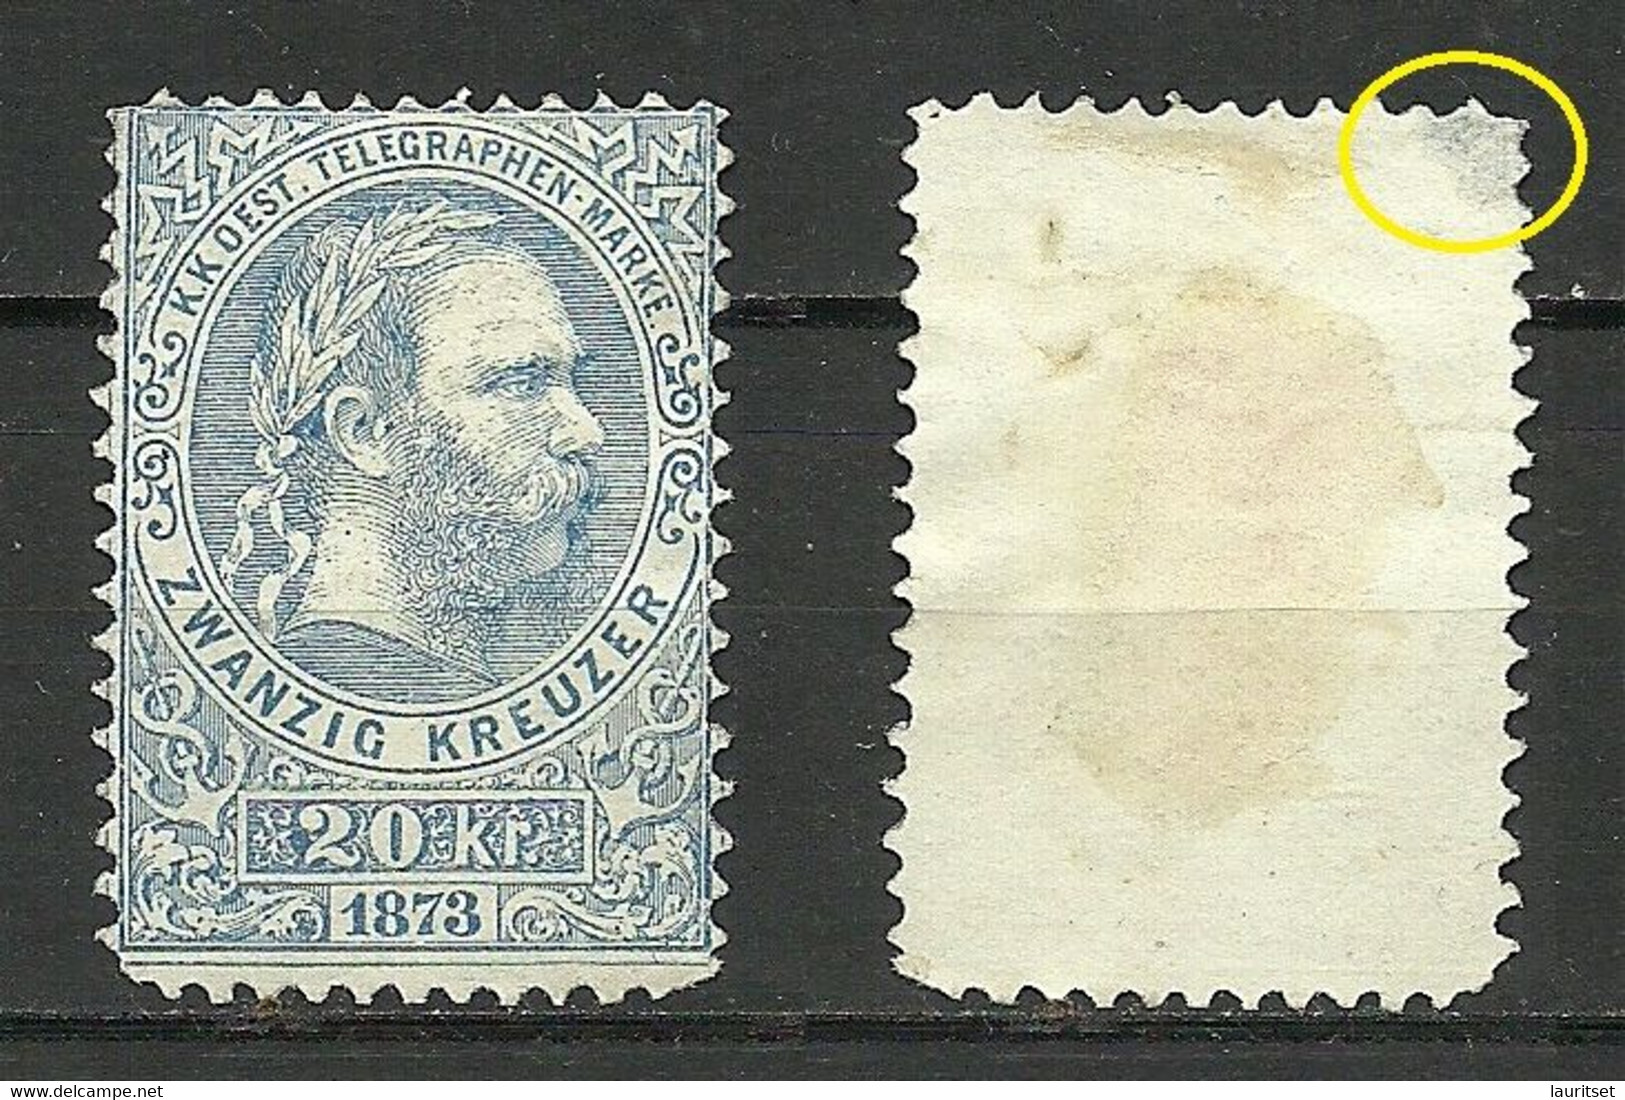 Österreich Austria 1873 Keiser Franz Joseph Telegraphenmarke 20 Kr. (*) Telegraph NB! Thinned Upper Corner! - Telegraph